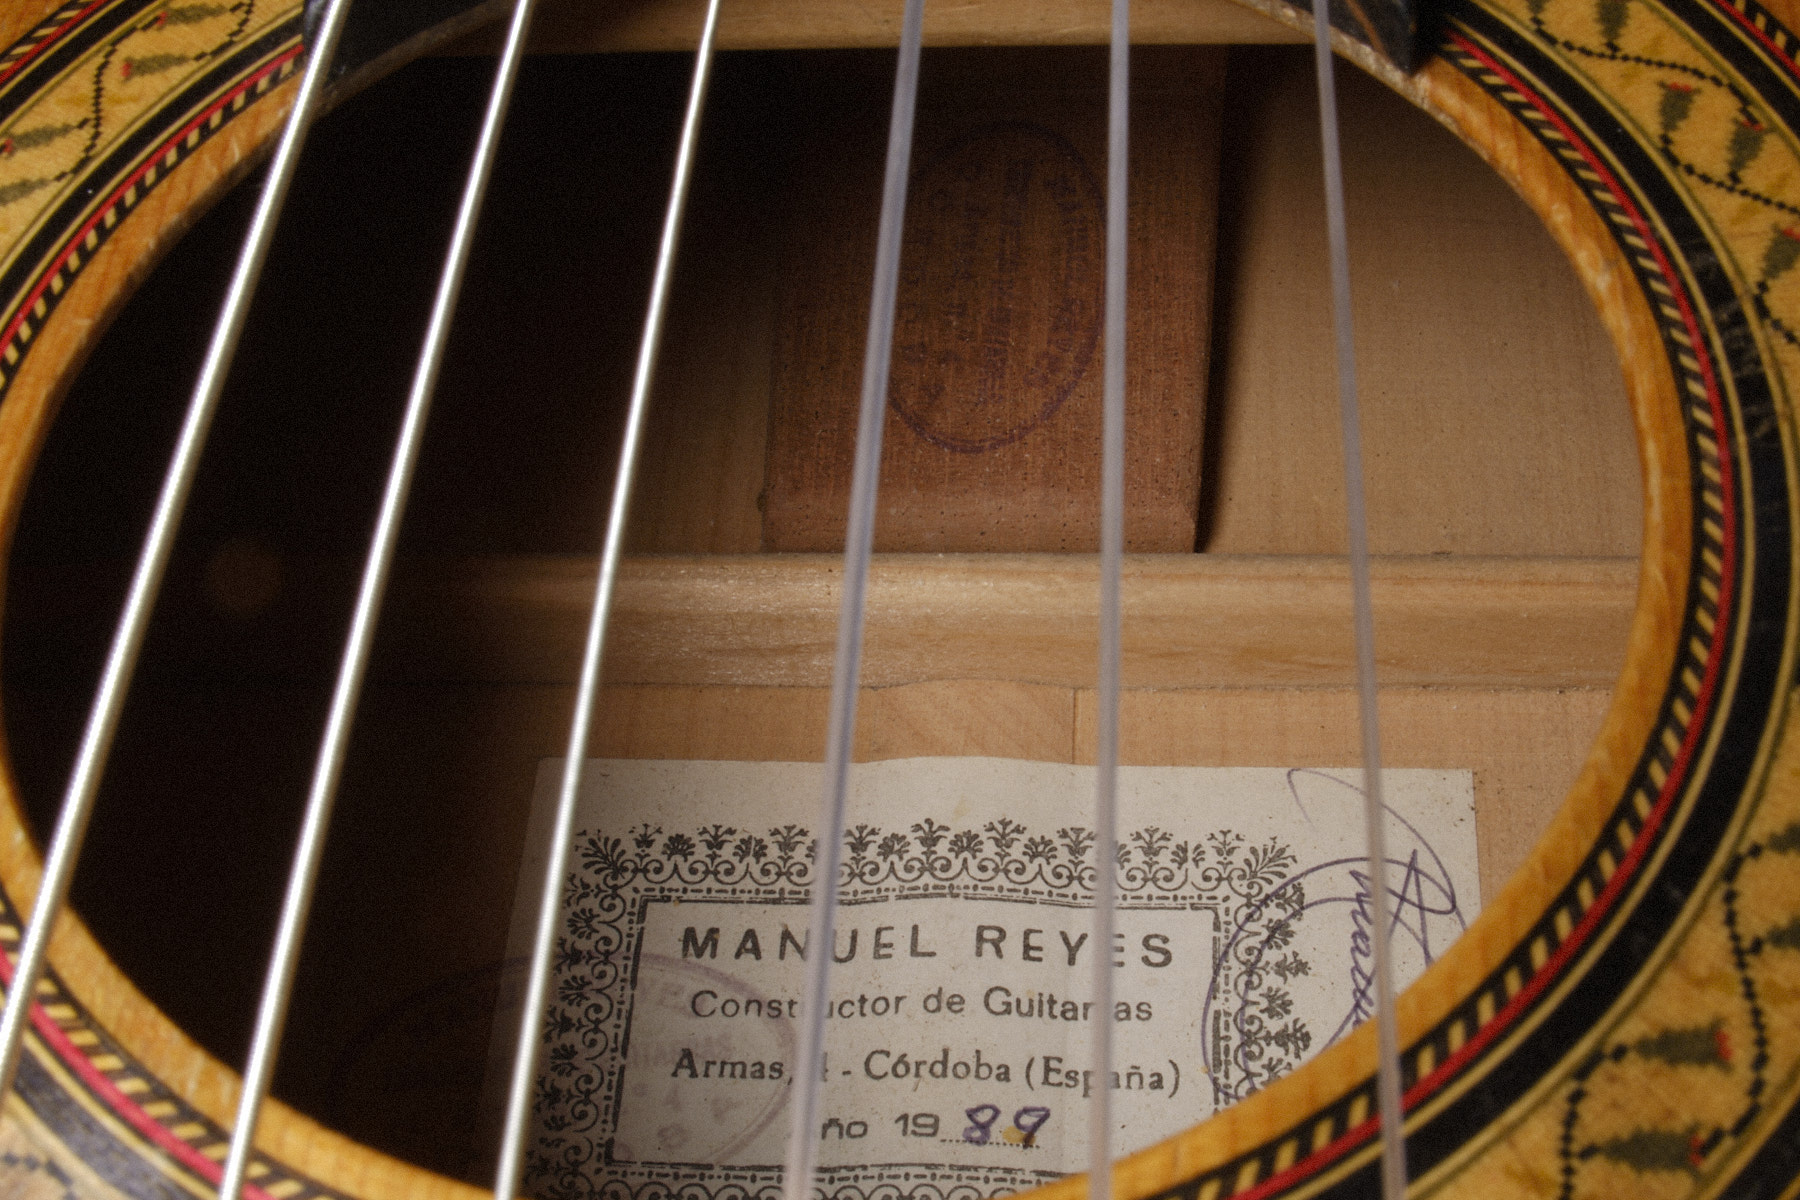 Manuel Reyes 1989 Guitar Label and Stamp